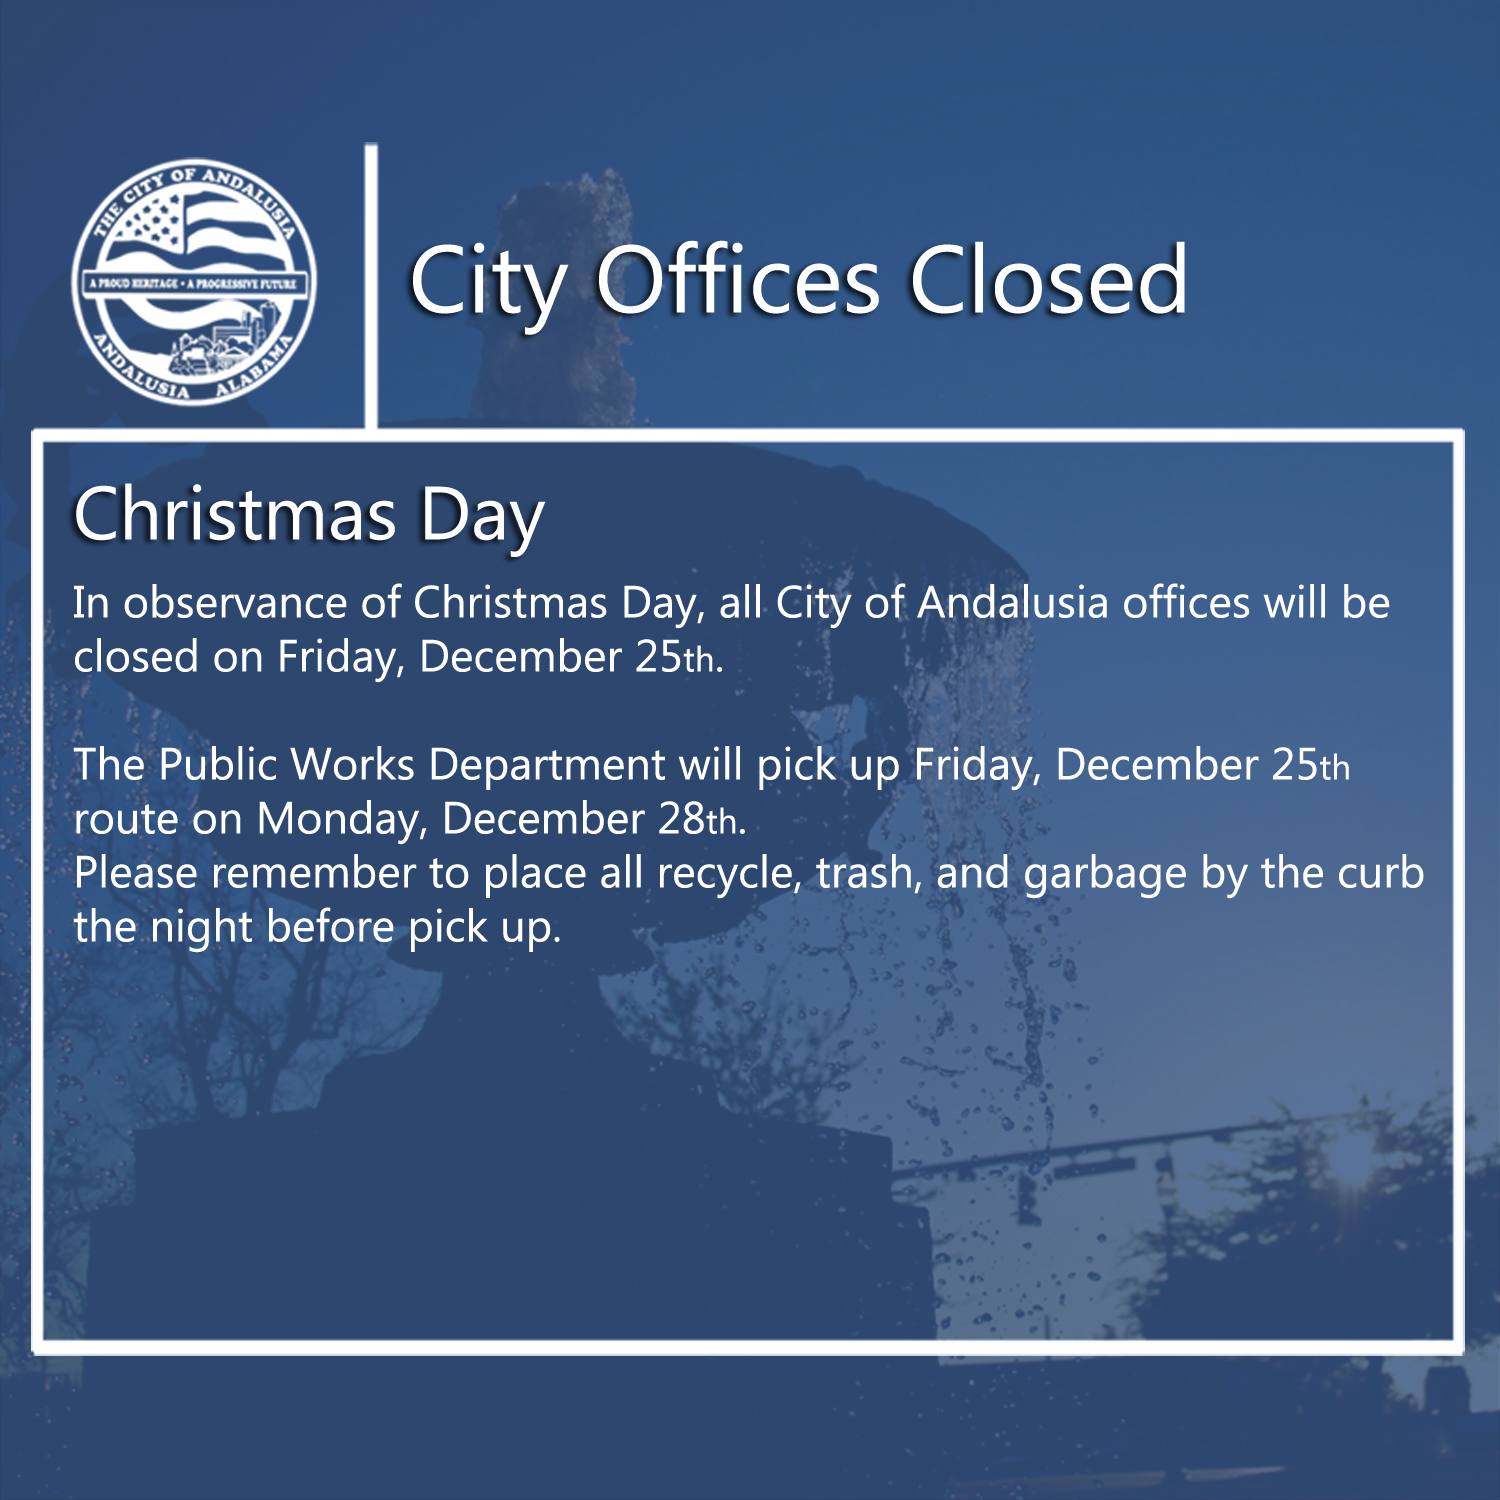 Facebook City Offices Closed Dec 25th